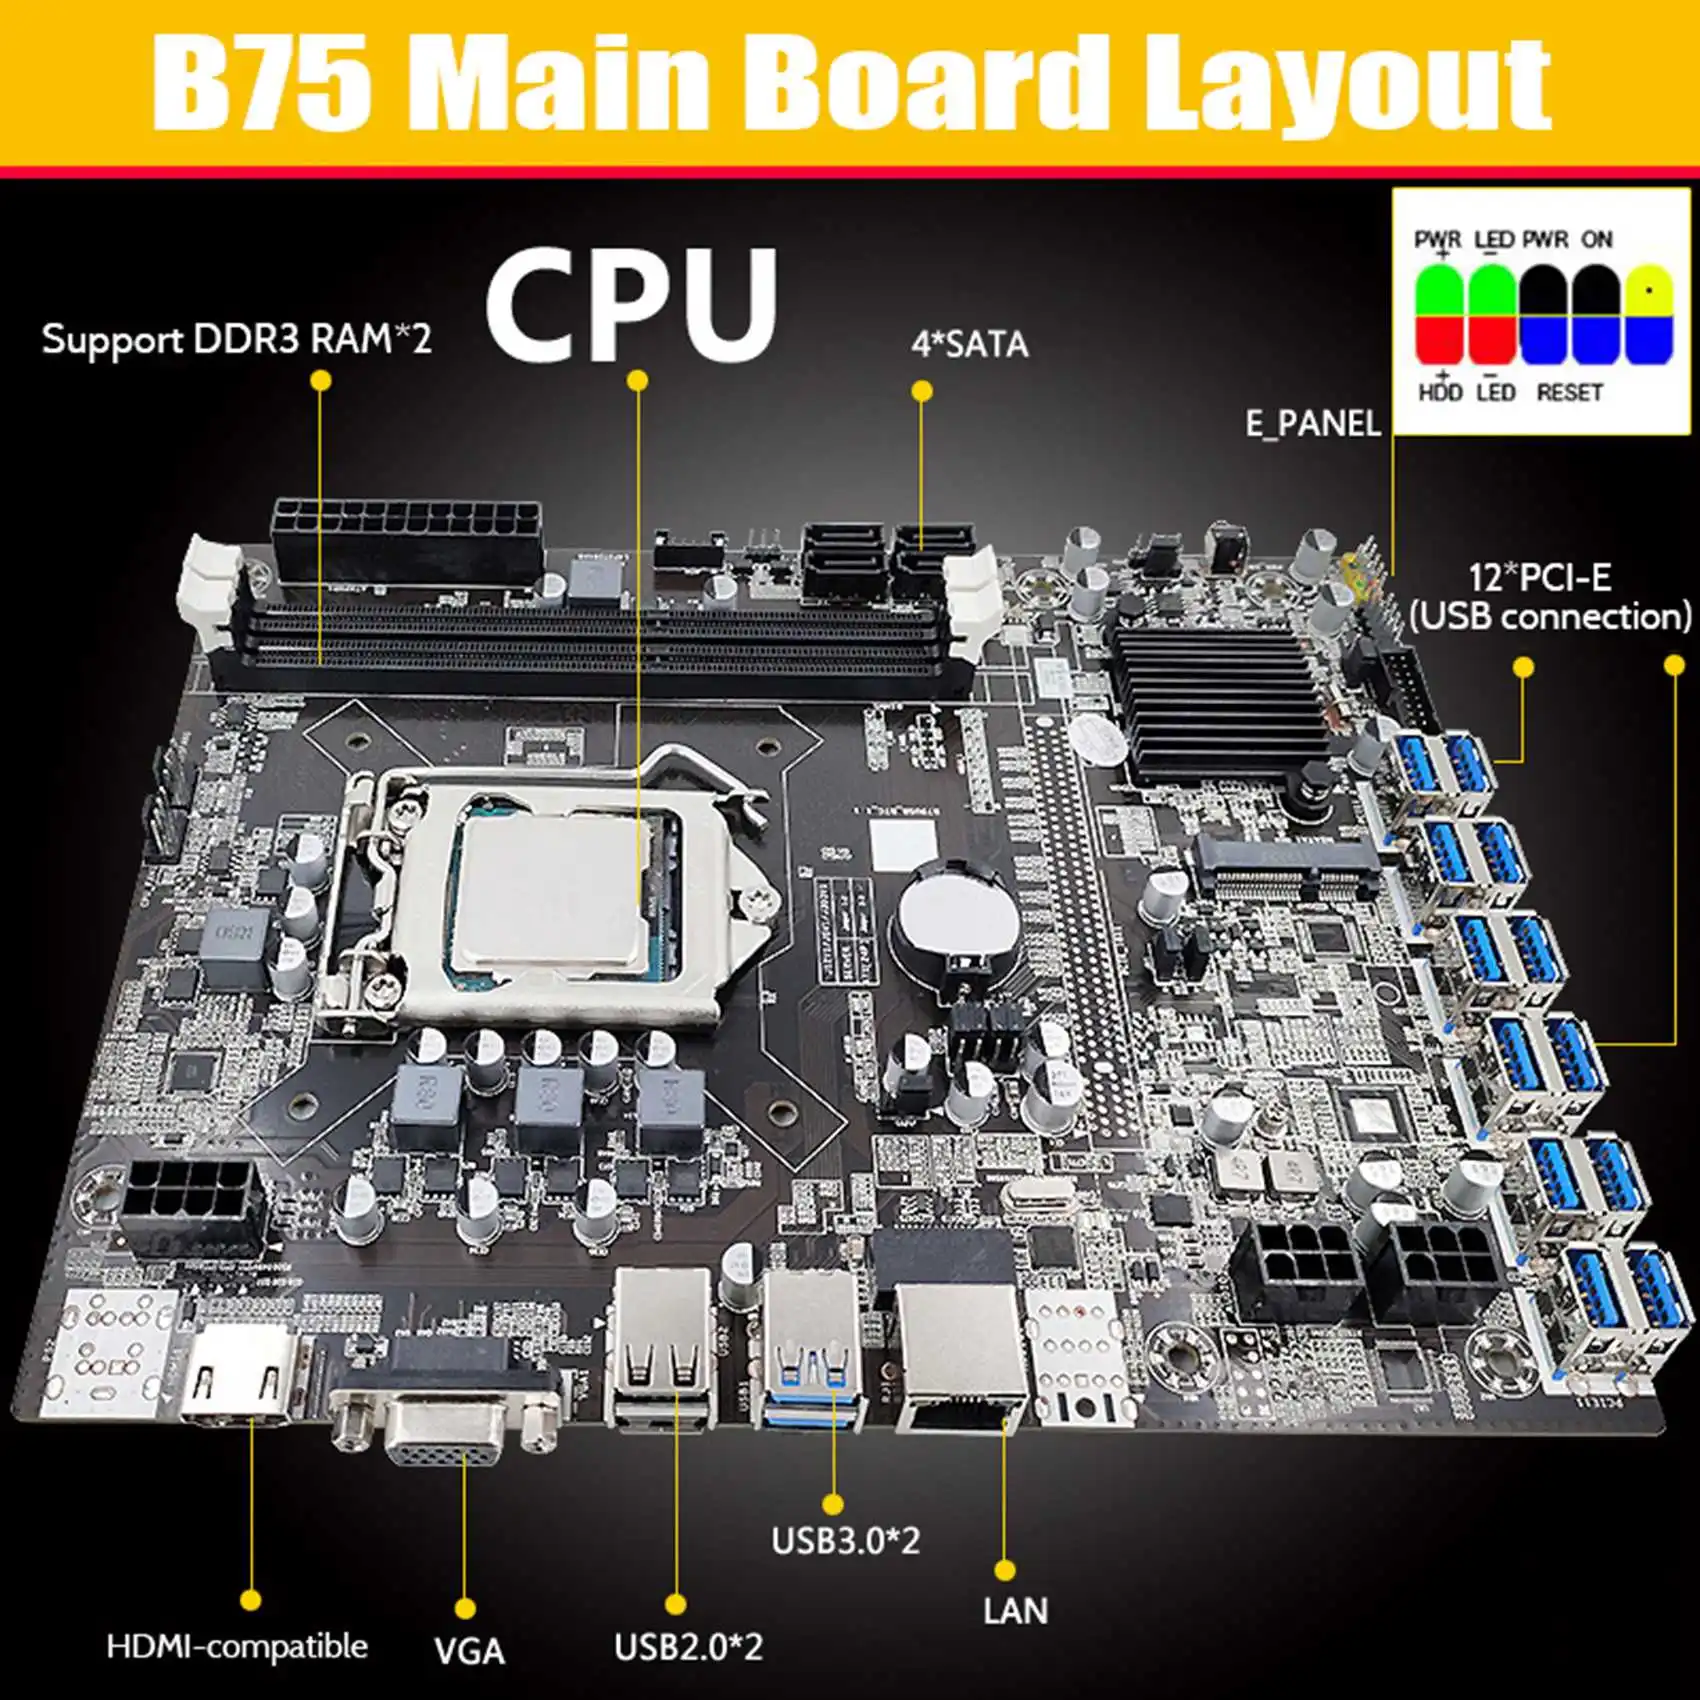 B75 ETH Rudar Motherboard 12USB+G1630 CPU+2XDDR4 4G RAM+128G SSD+64 G Gonilnik USB+Ventilator+SATA Kabel+Switch Kabel za BTC